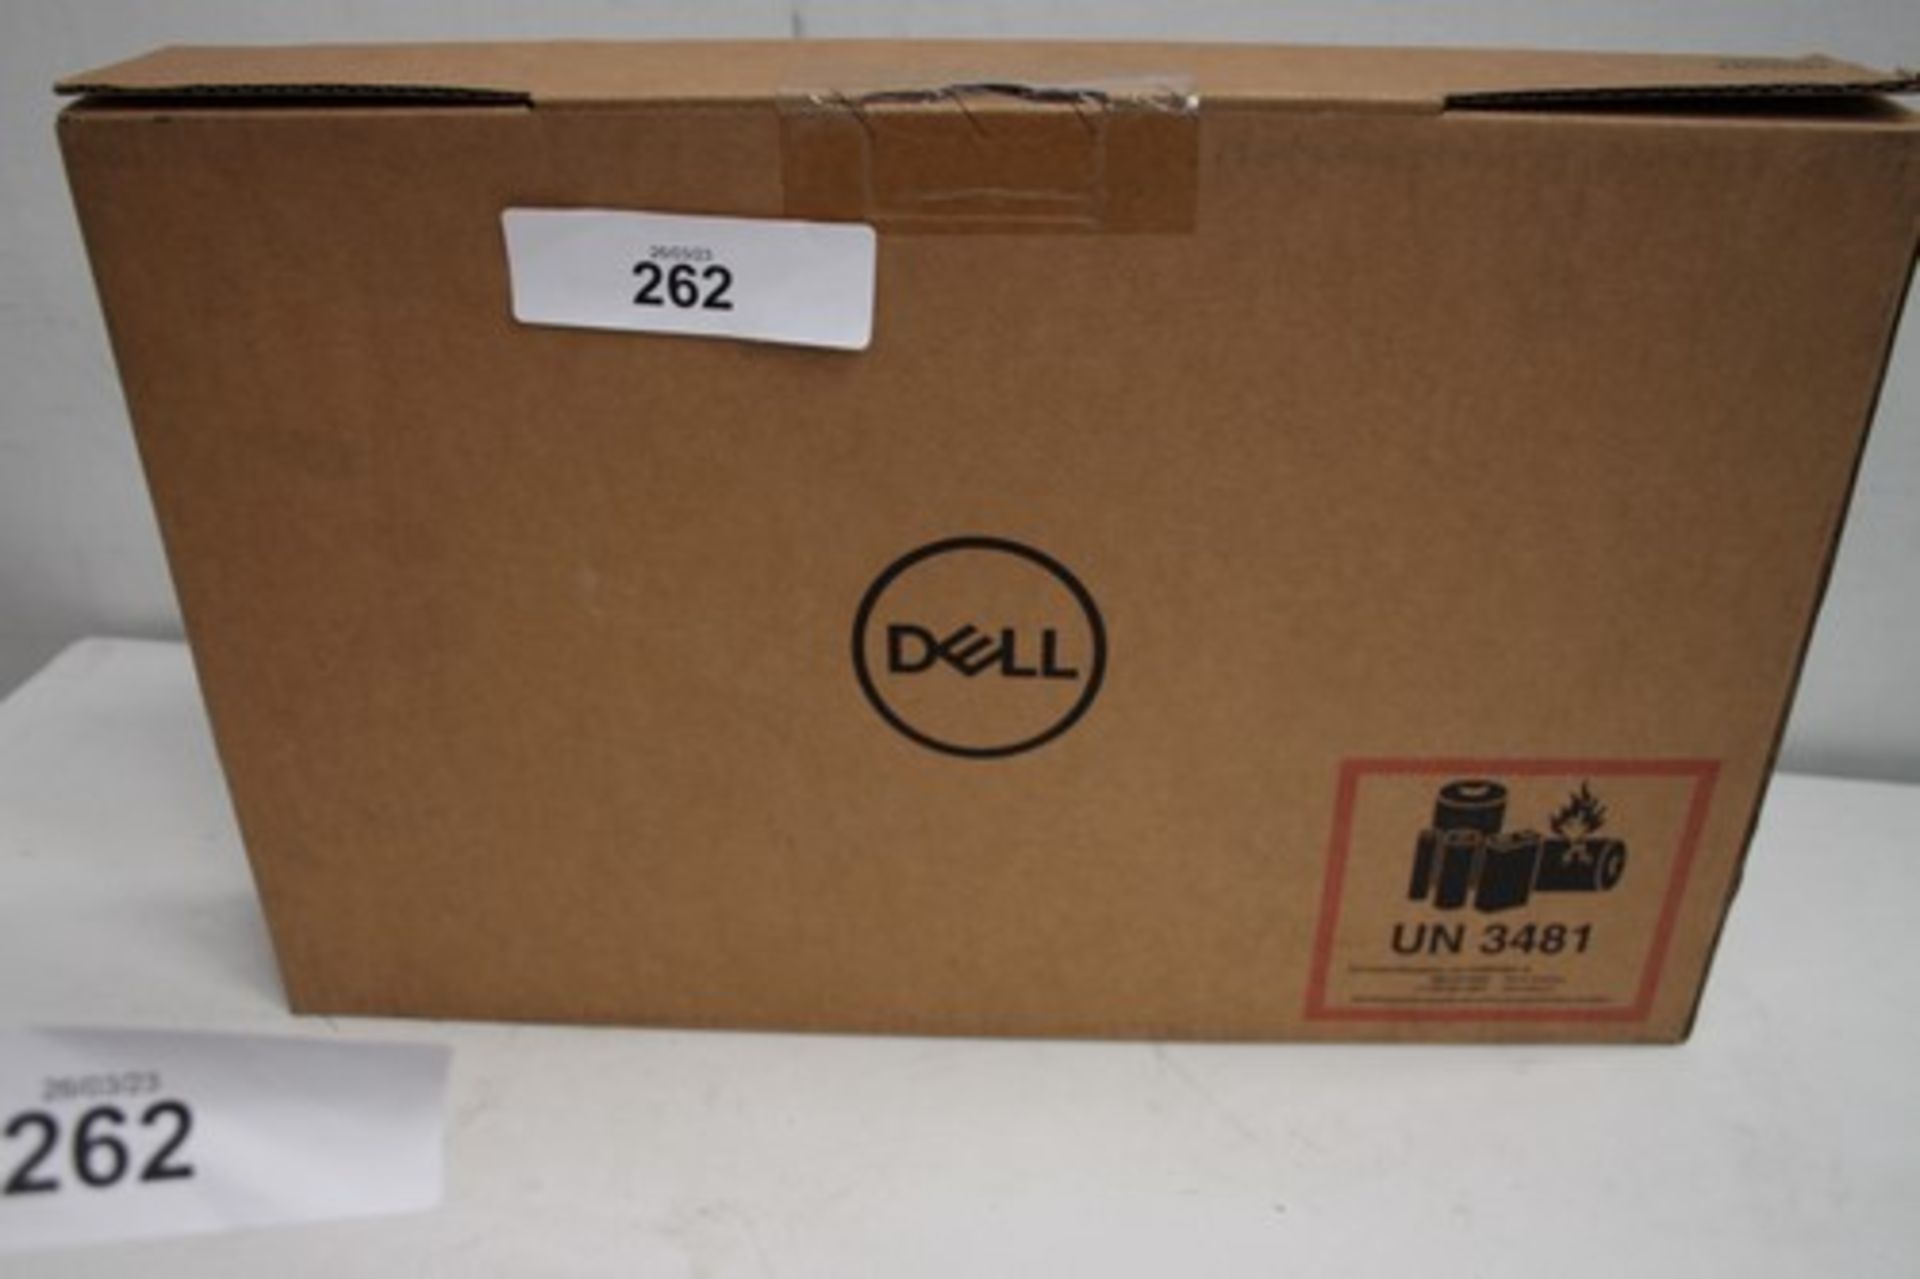 1 x Dell Inspiration 15 15 laptop 15.6" FHD Display, intel core i7 processor, 8GB memory, windows